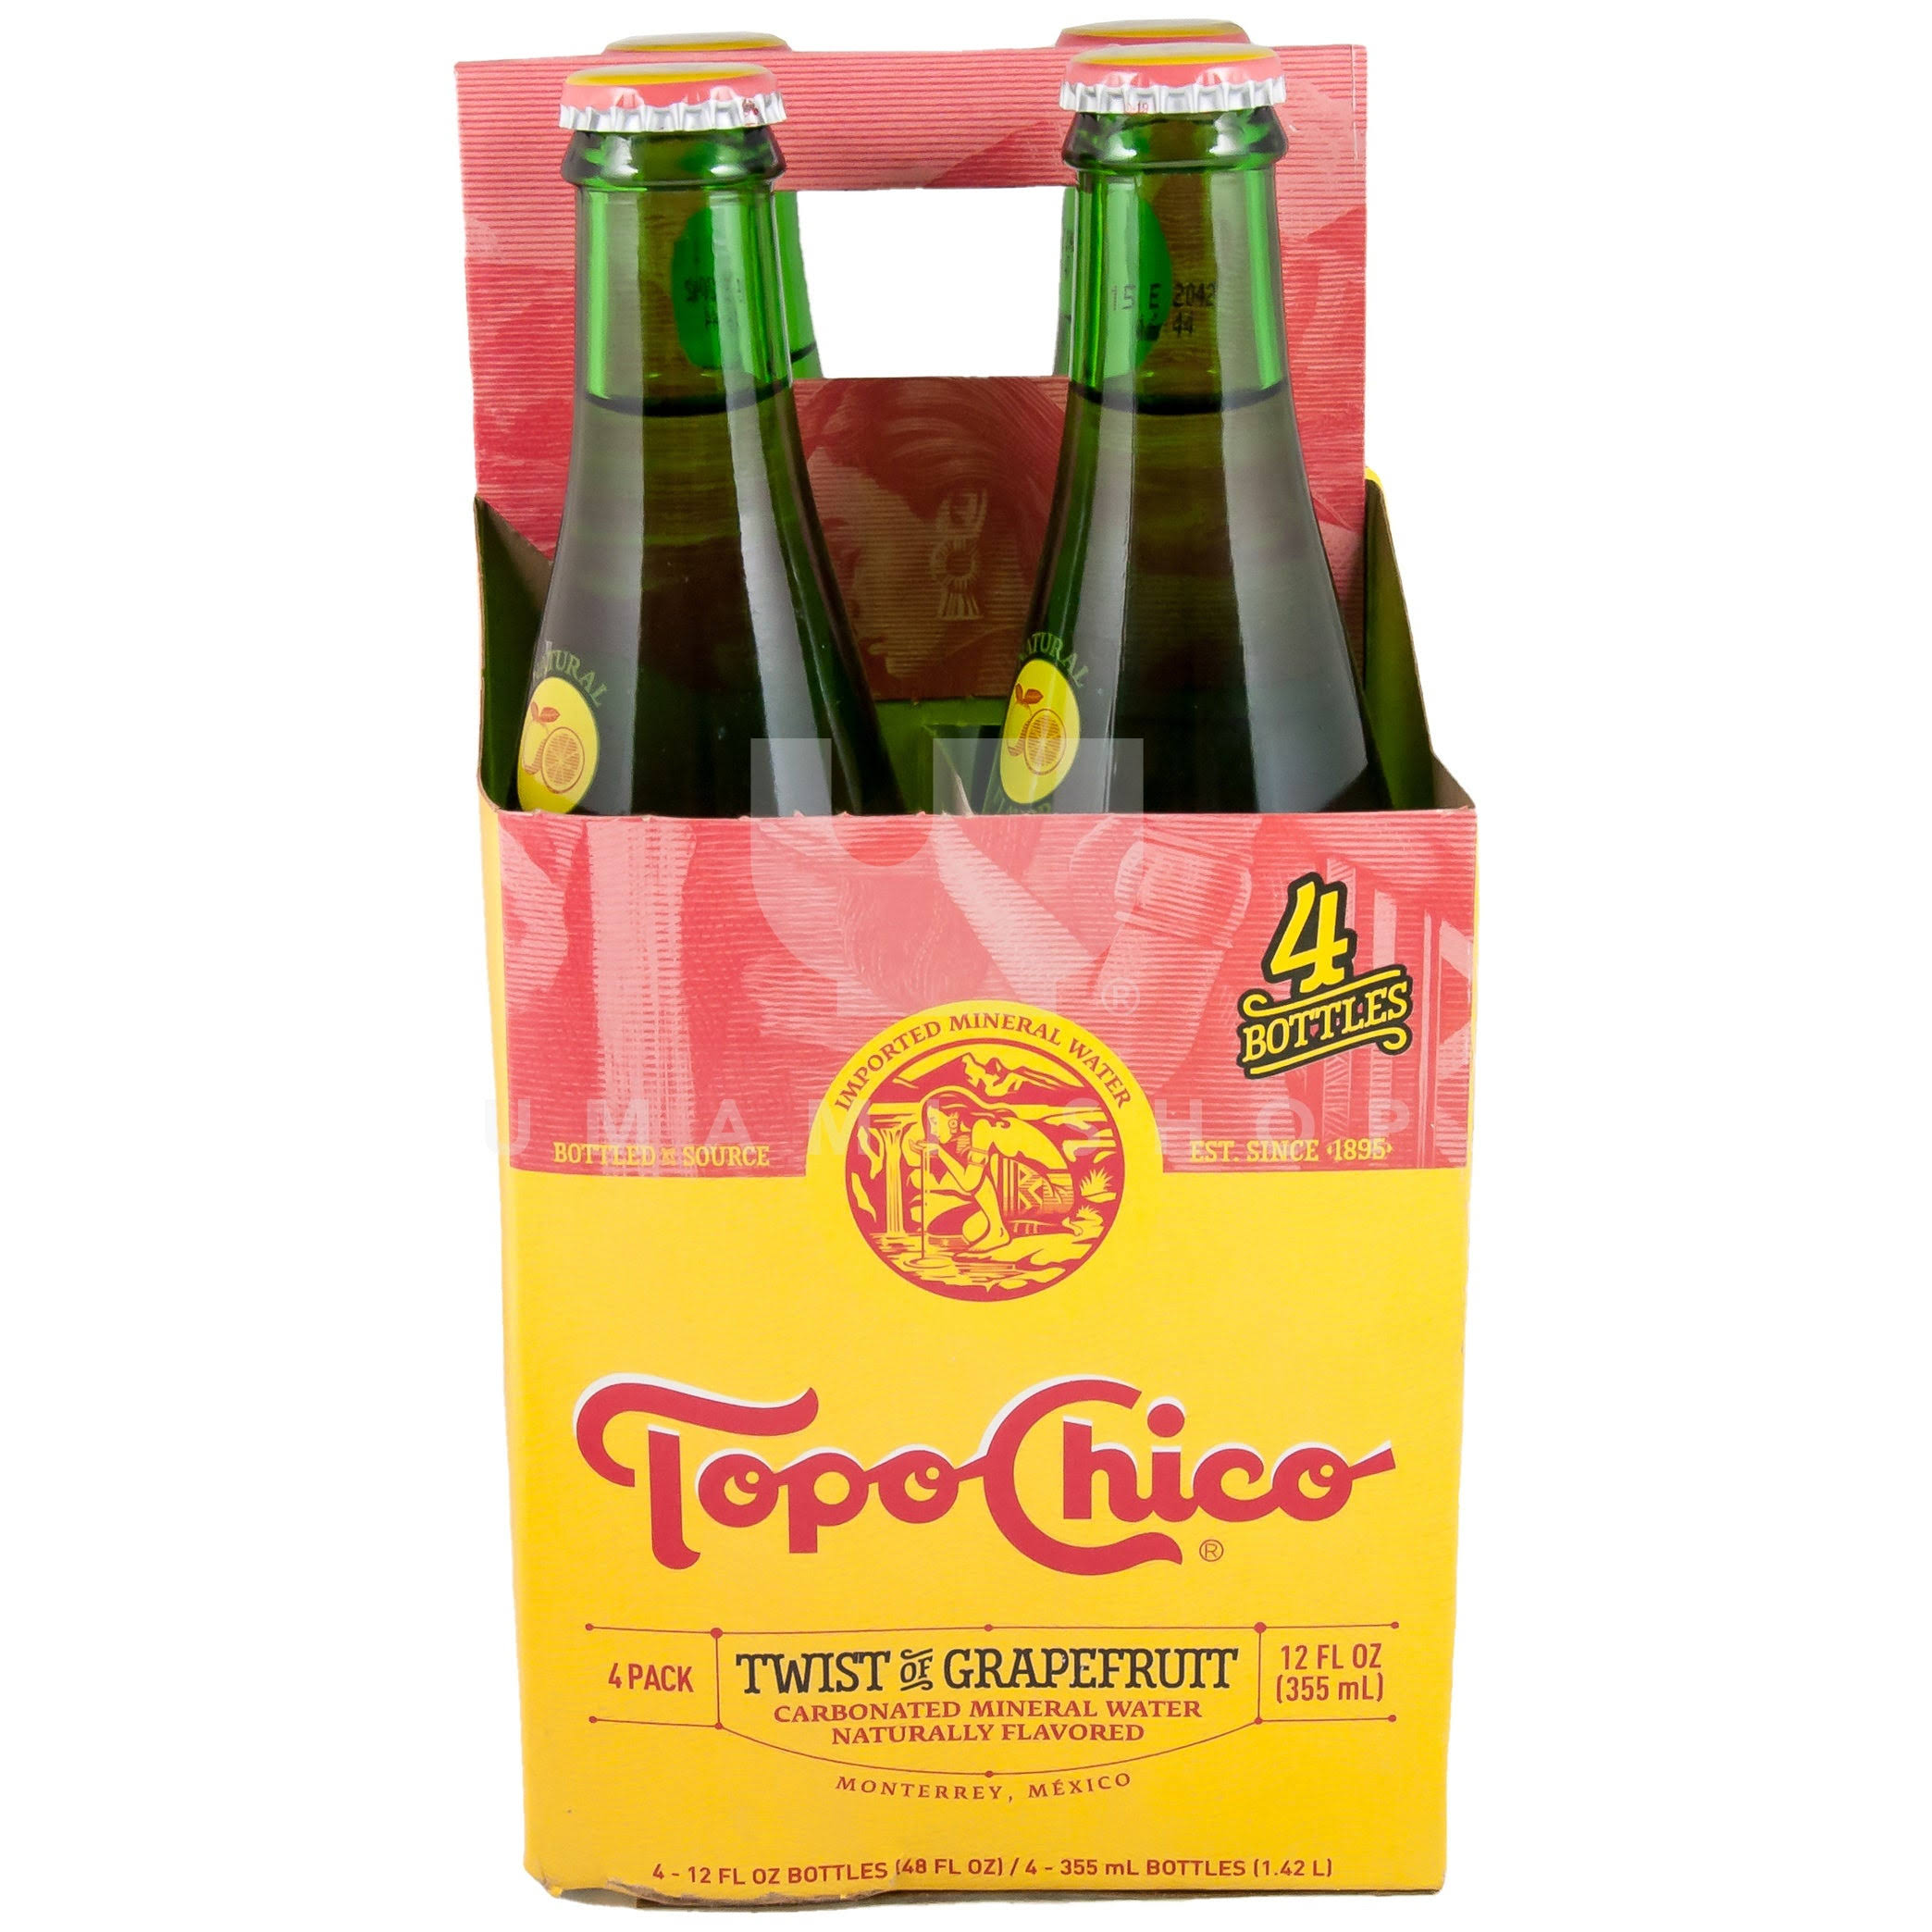 Topo Chico Sparkling Mineral Water - Twist of Grapefruit, 12oz, 4ct